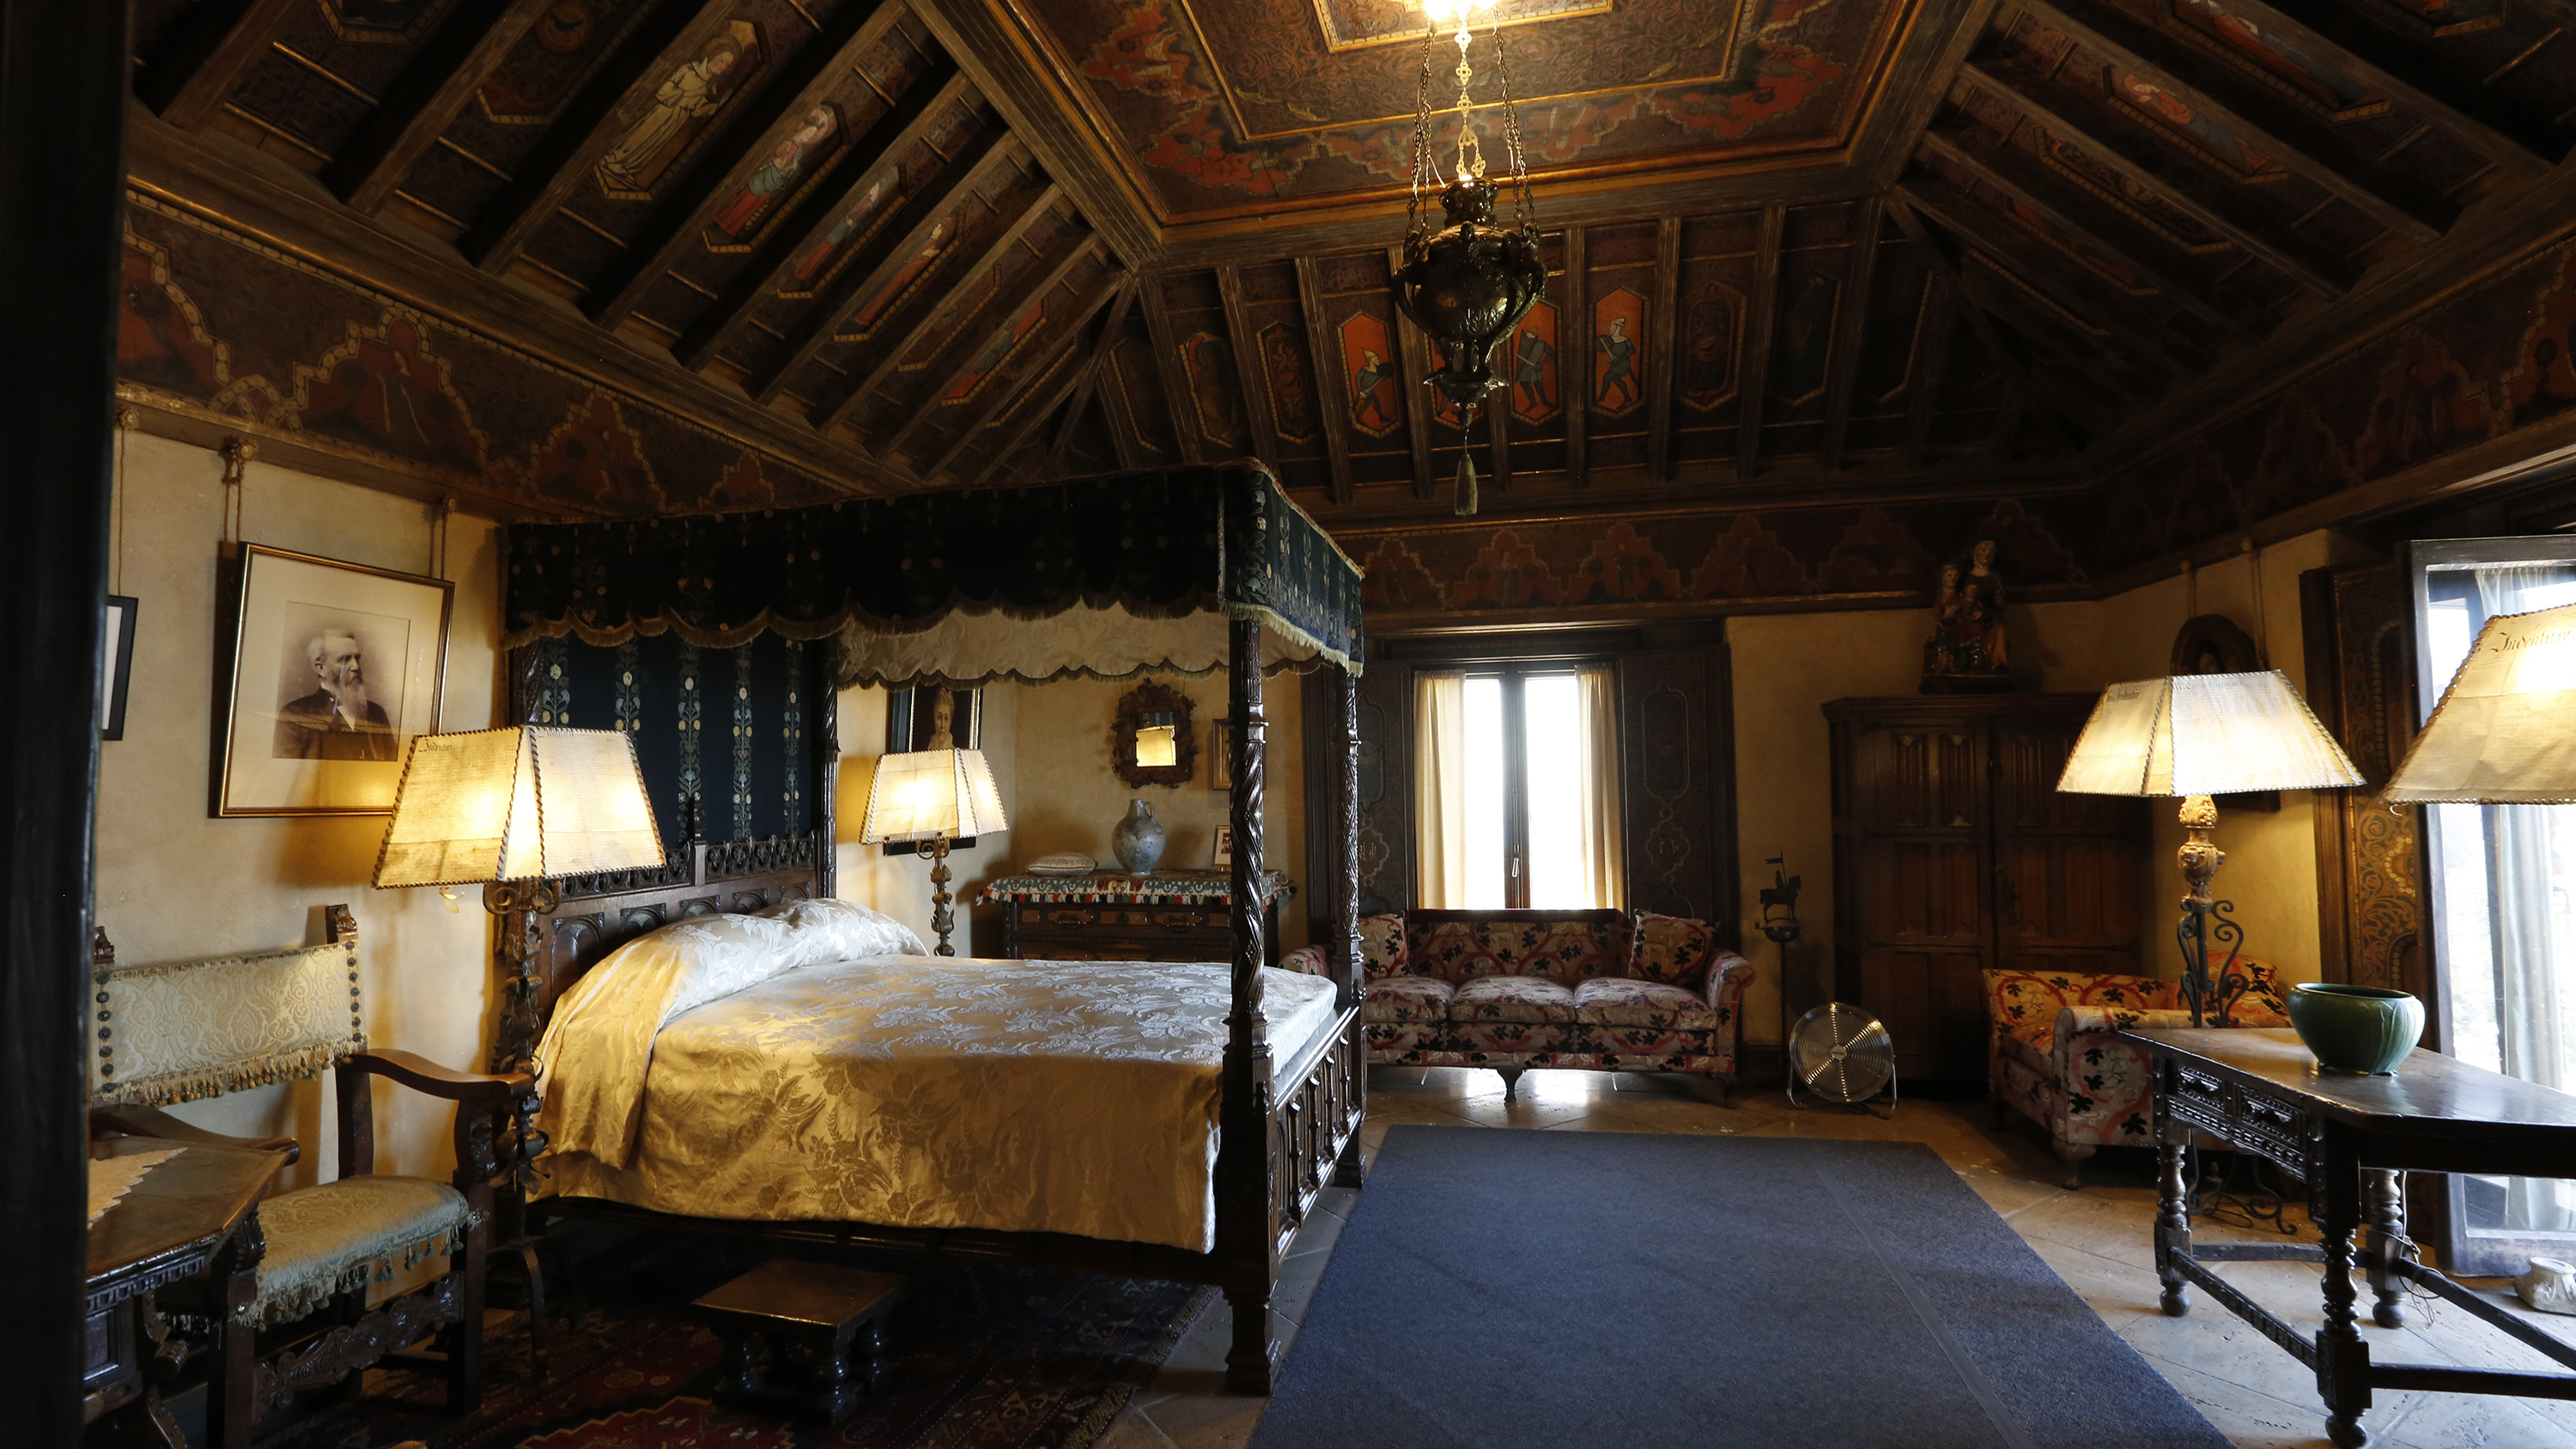 Hearst Castle 15 Secrets That Will Amaze Tourists Cnn Travel